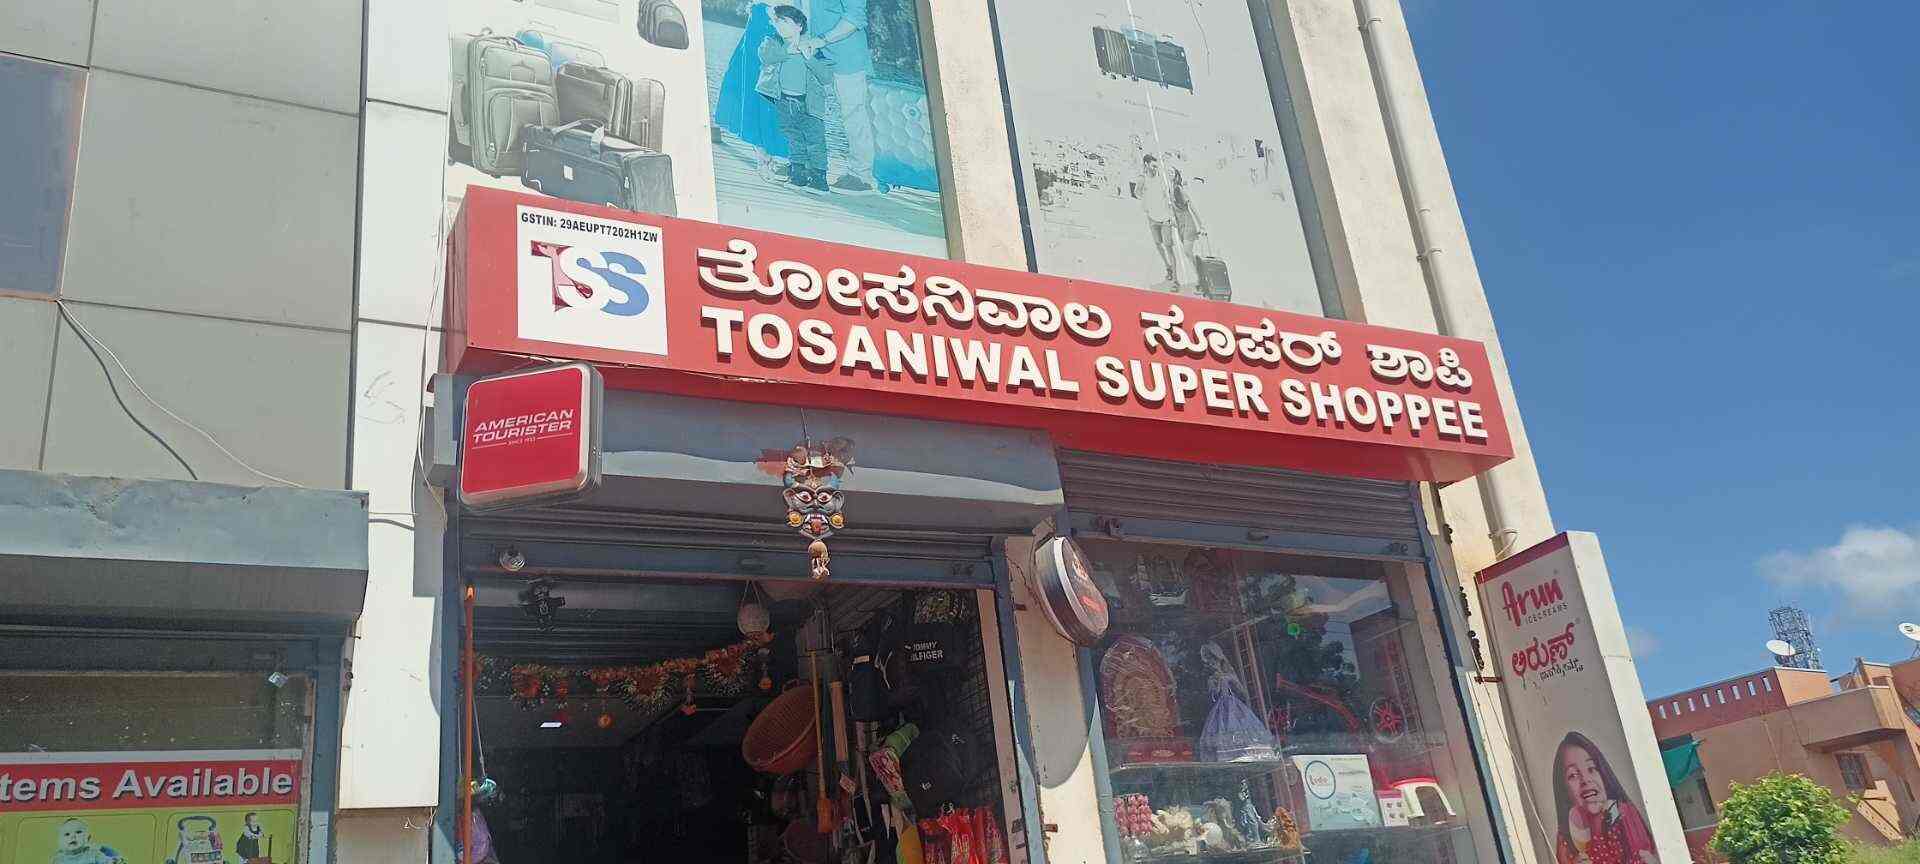 Tosaniwal Super Shoppee